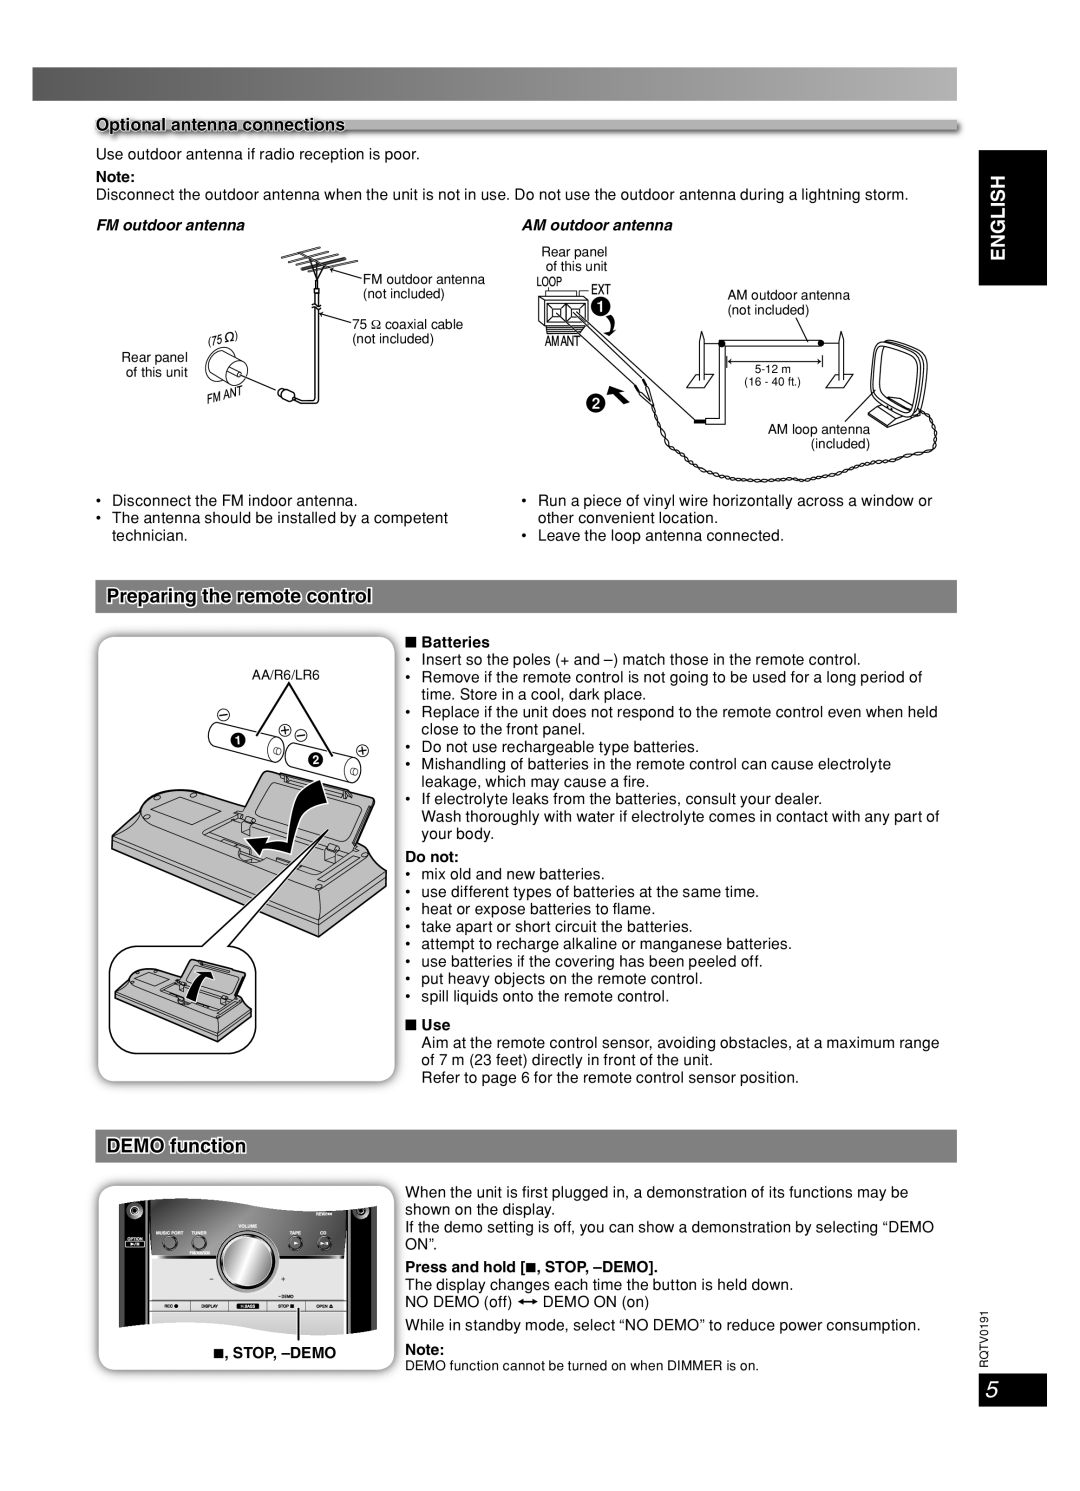 Panasonic SC-AK450 English, Dansk, Preparing the remote control, DEMO function, Français Lang, FM outdoor antenna 